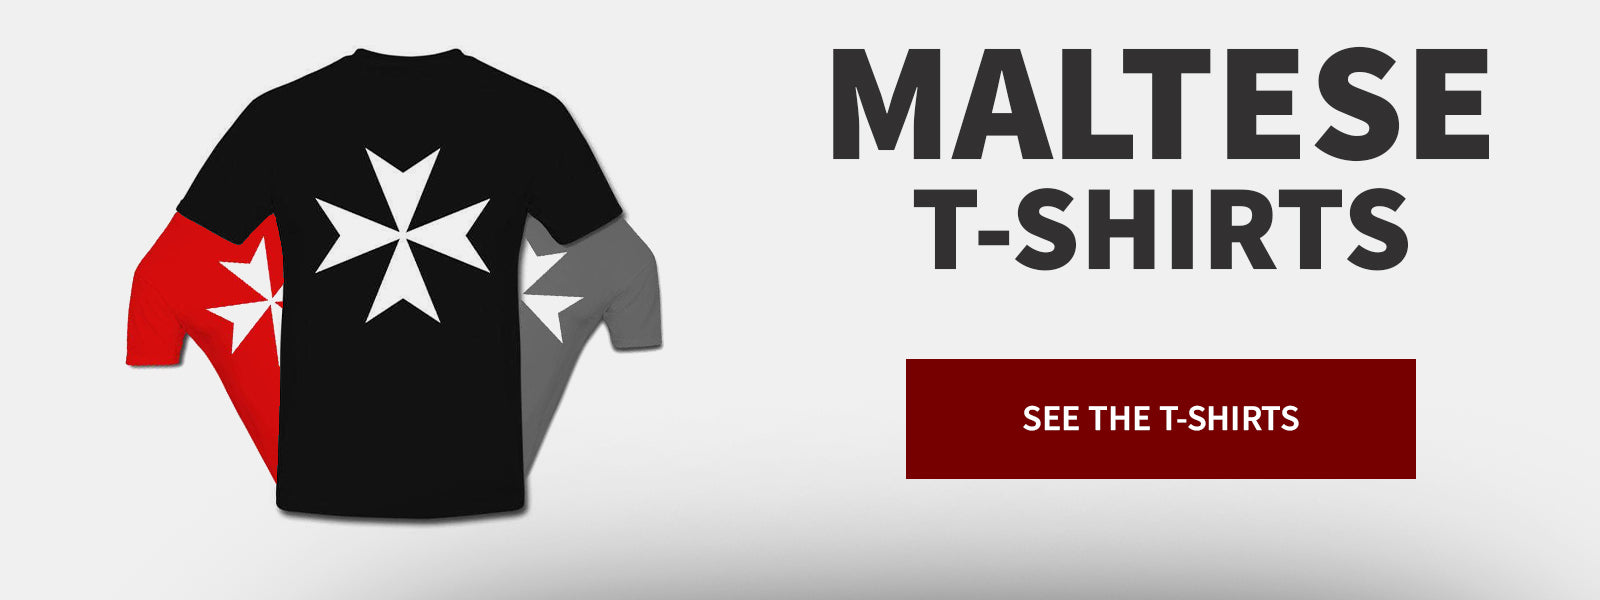 Maltese Cross T-Shirts